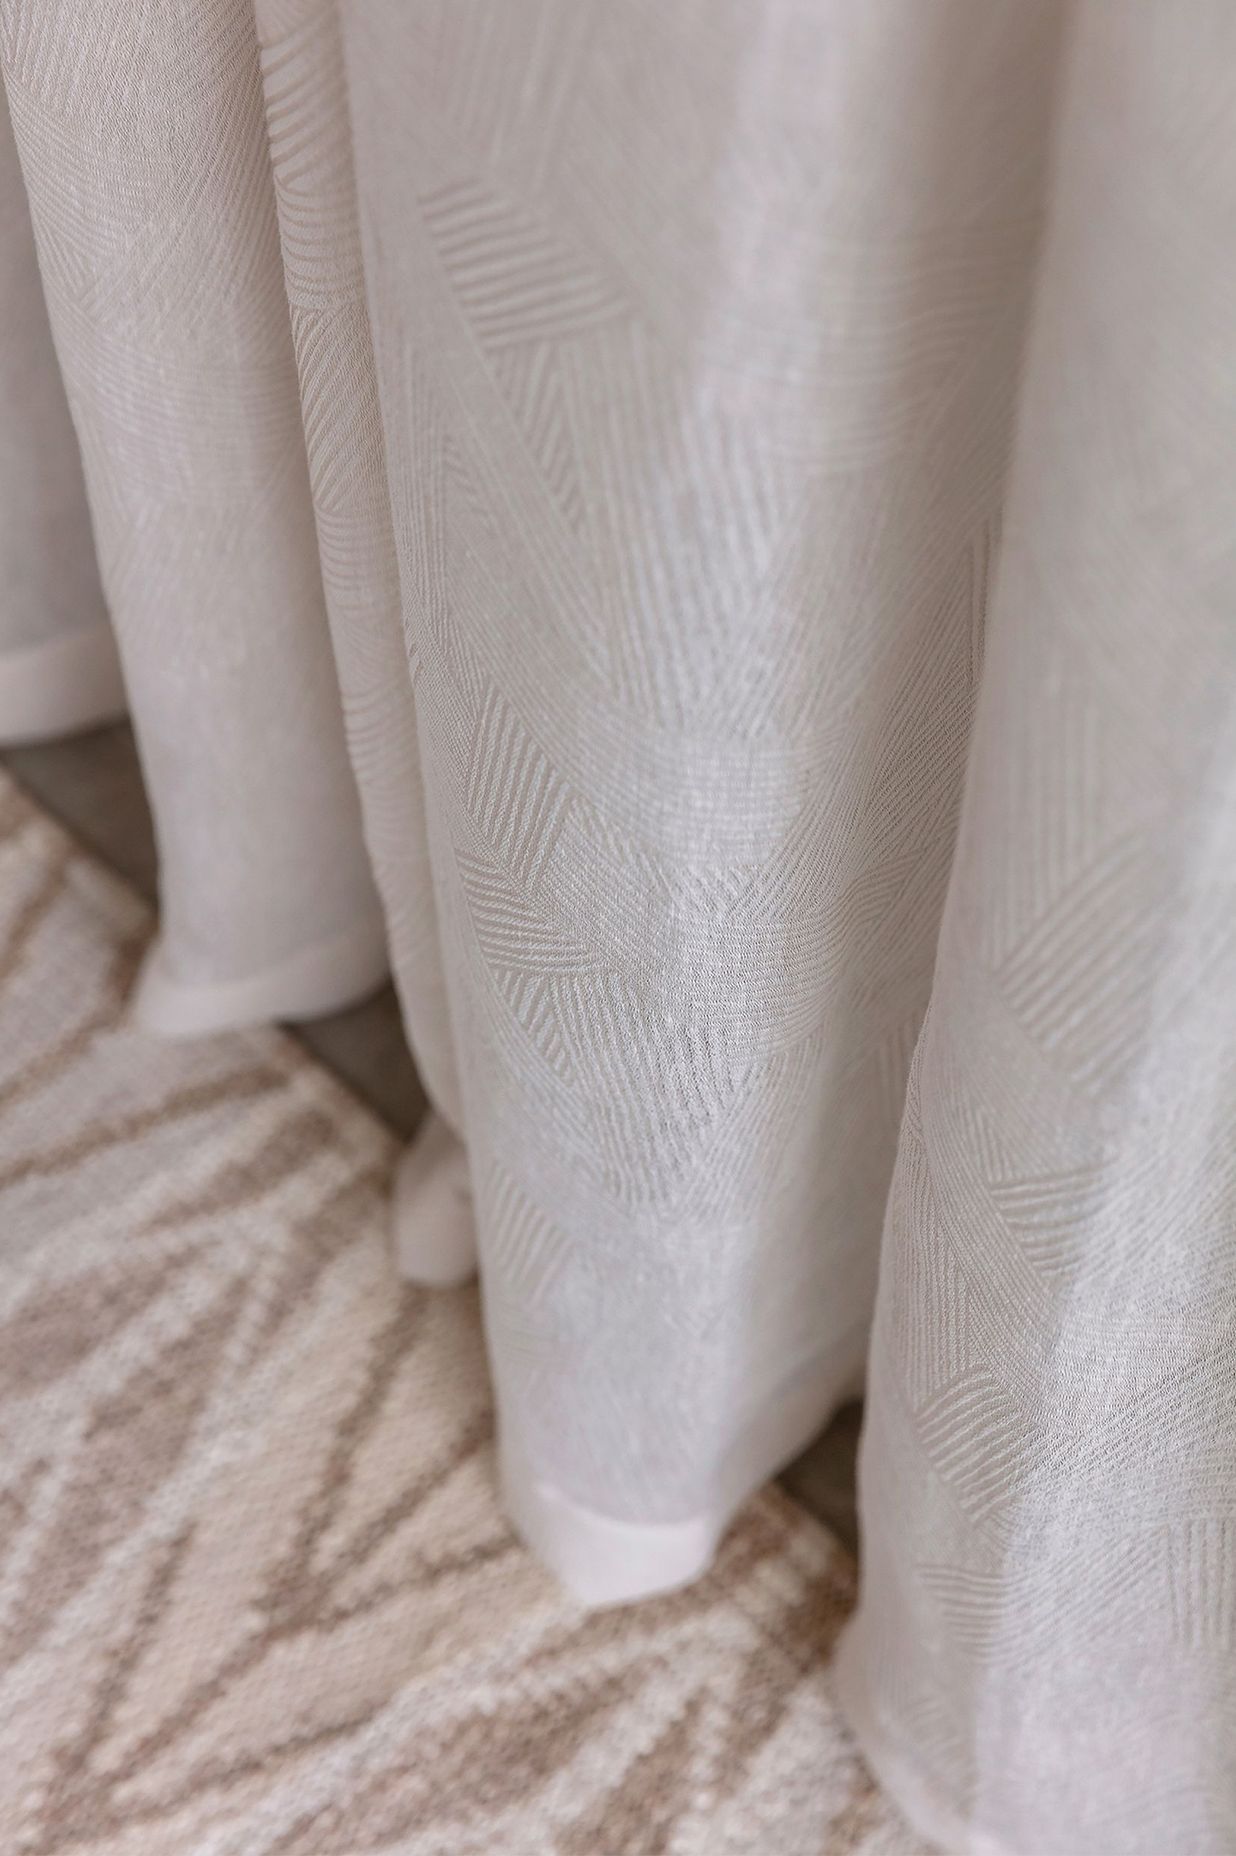 Fusion Cocoon - Creating comfort via textiles